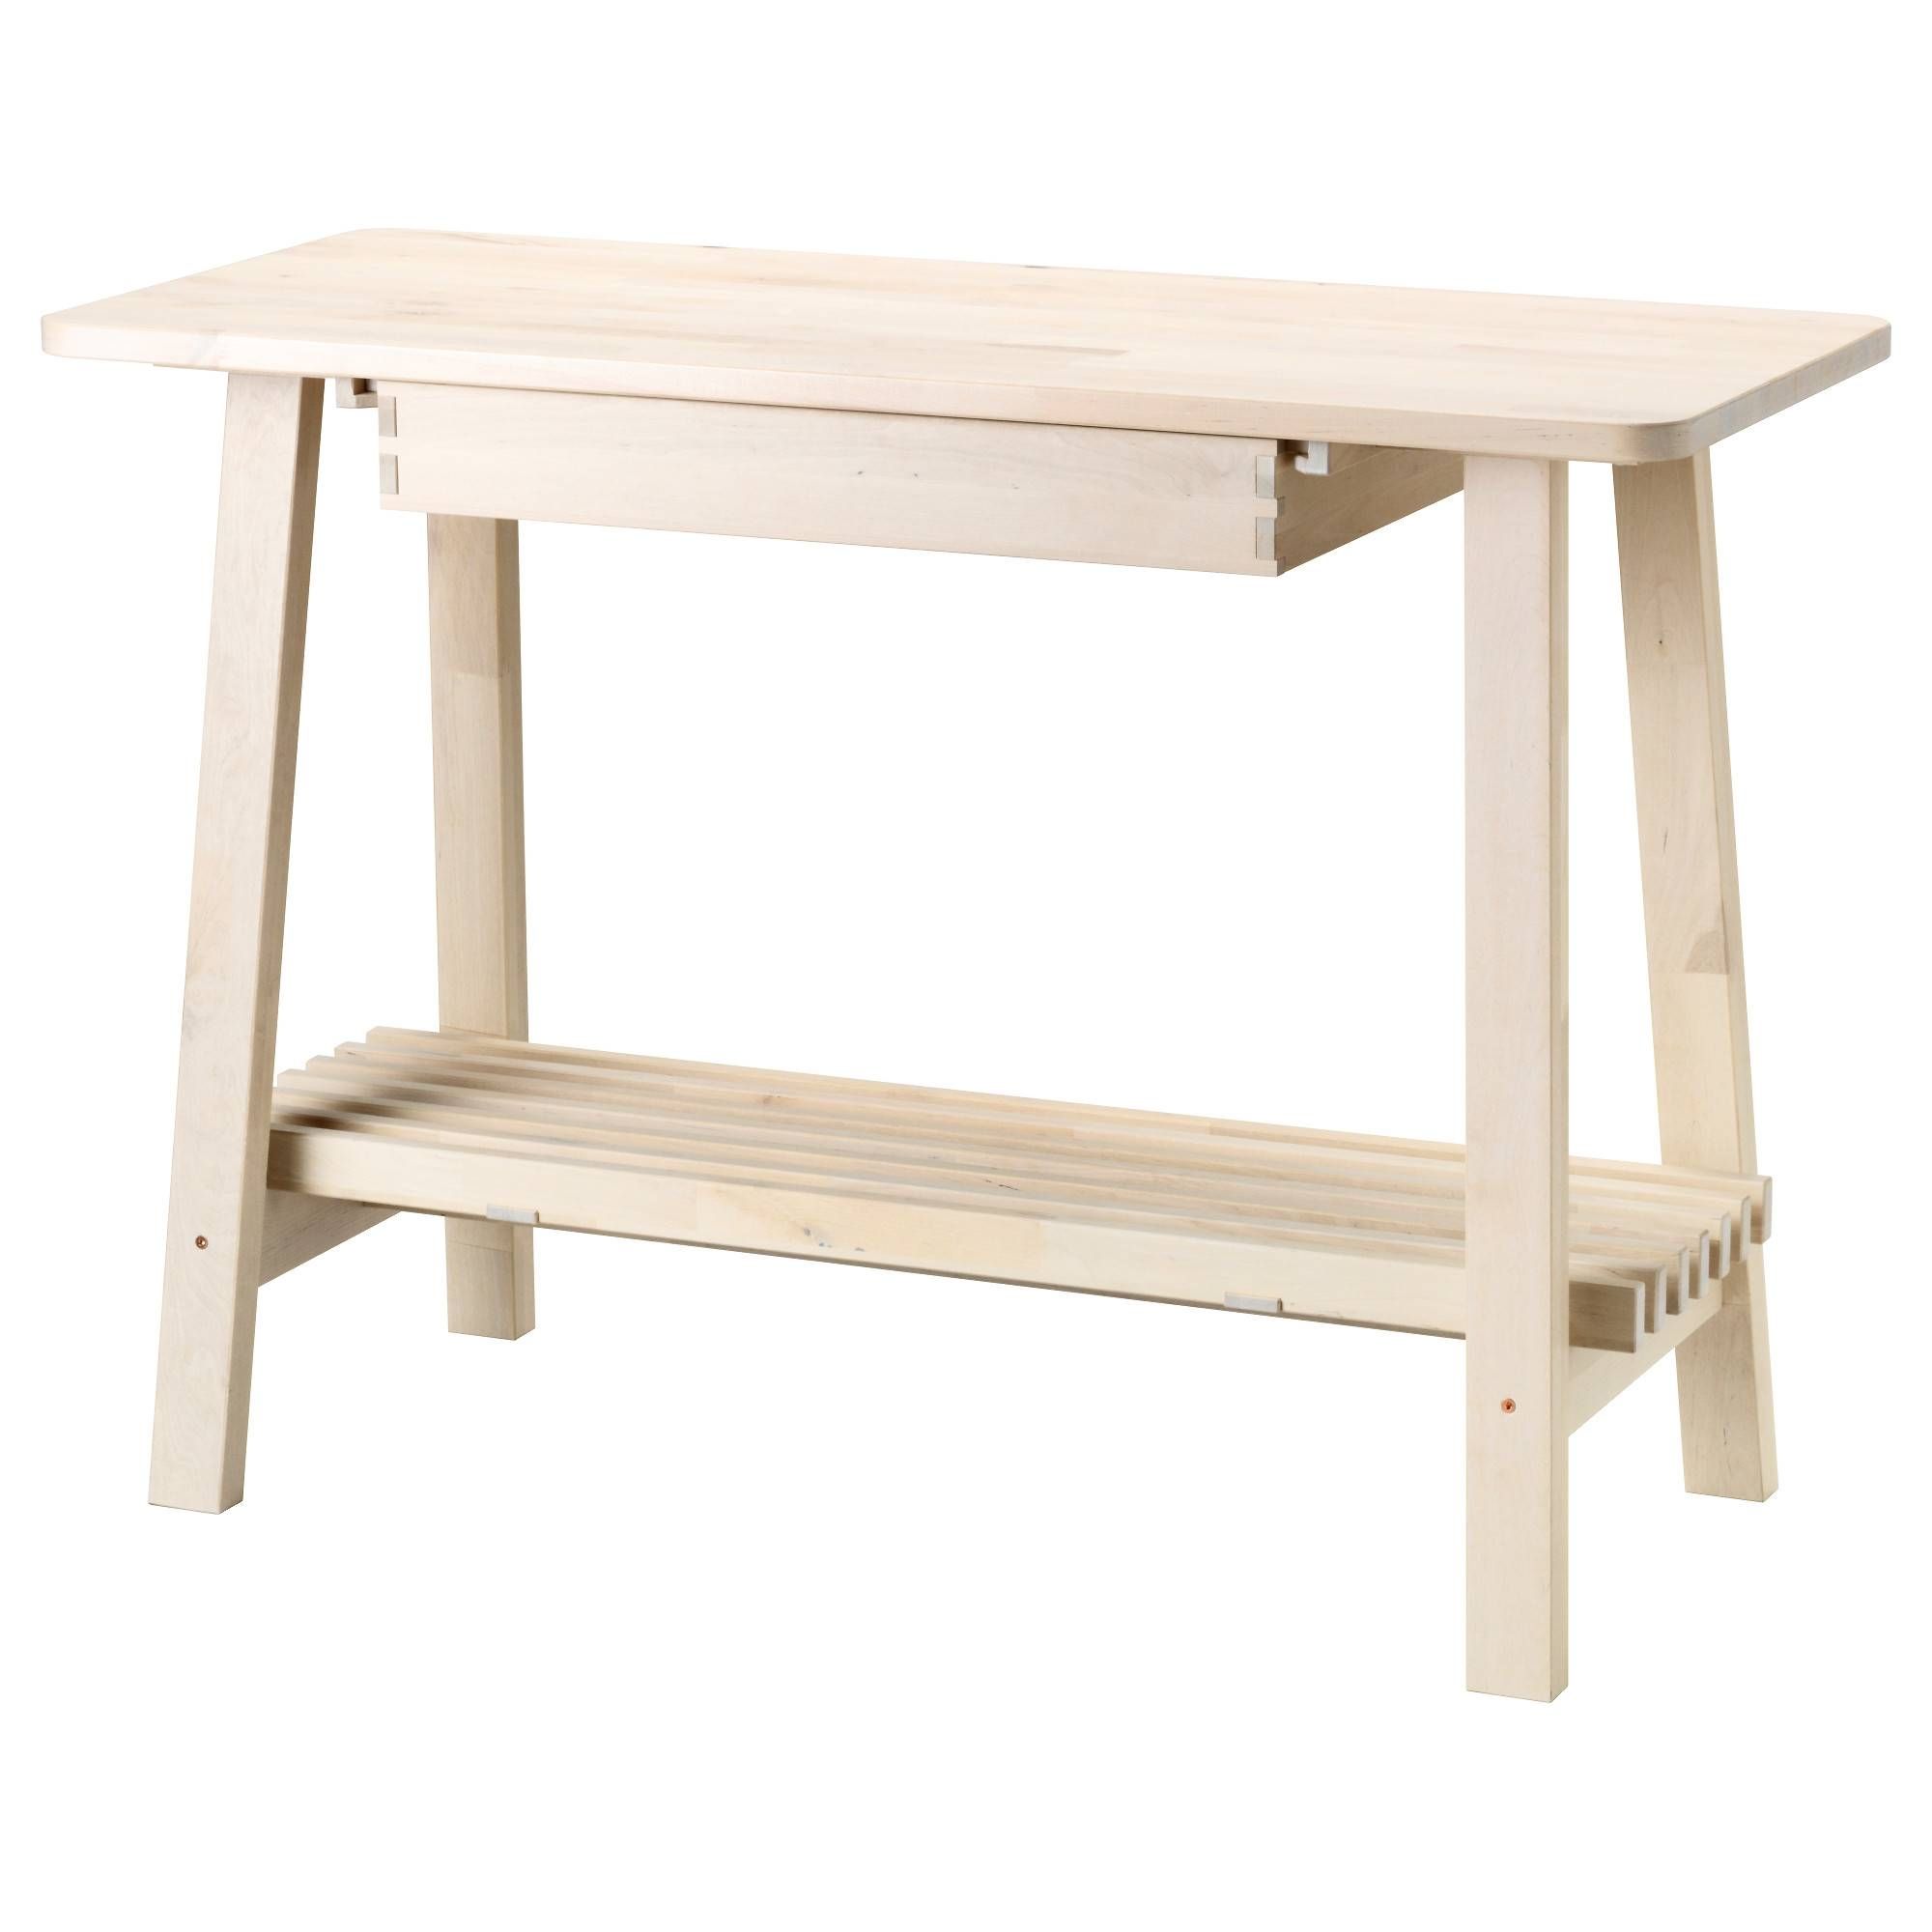 Norråker Sideboard White Birch 120x50 Cm – Ikea Regarding Sideboard Tables (View 12 of 15)